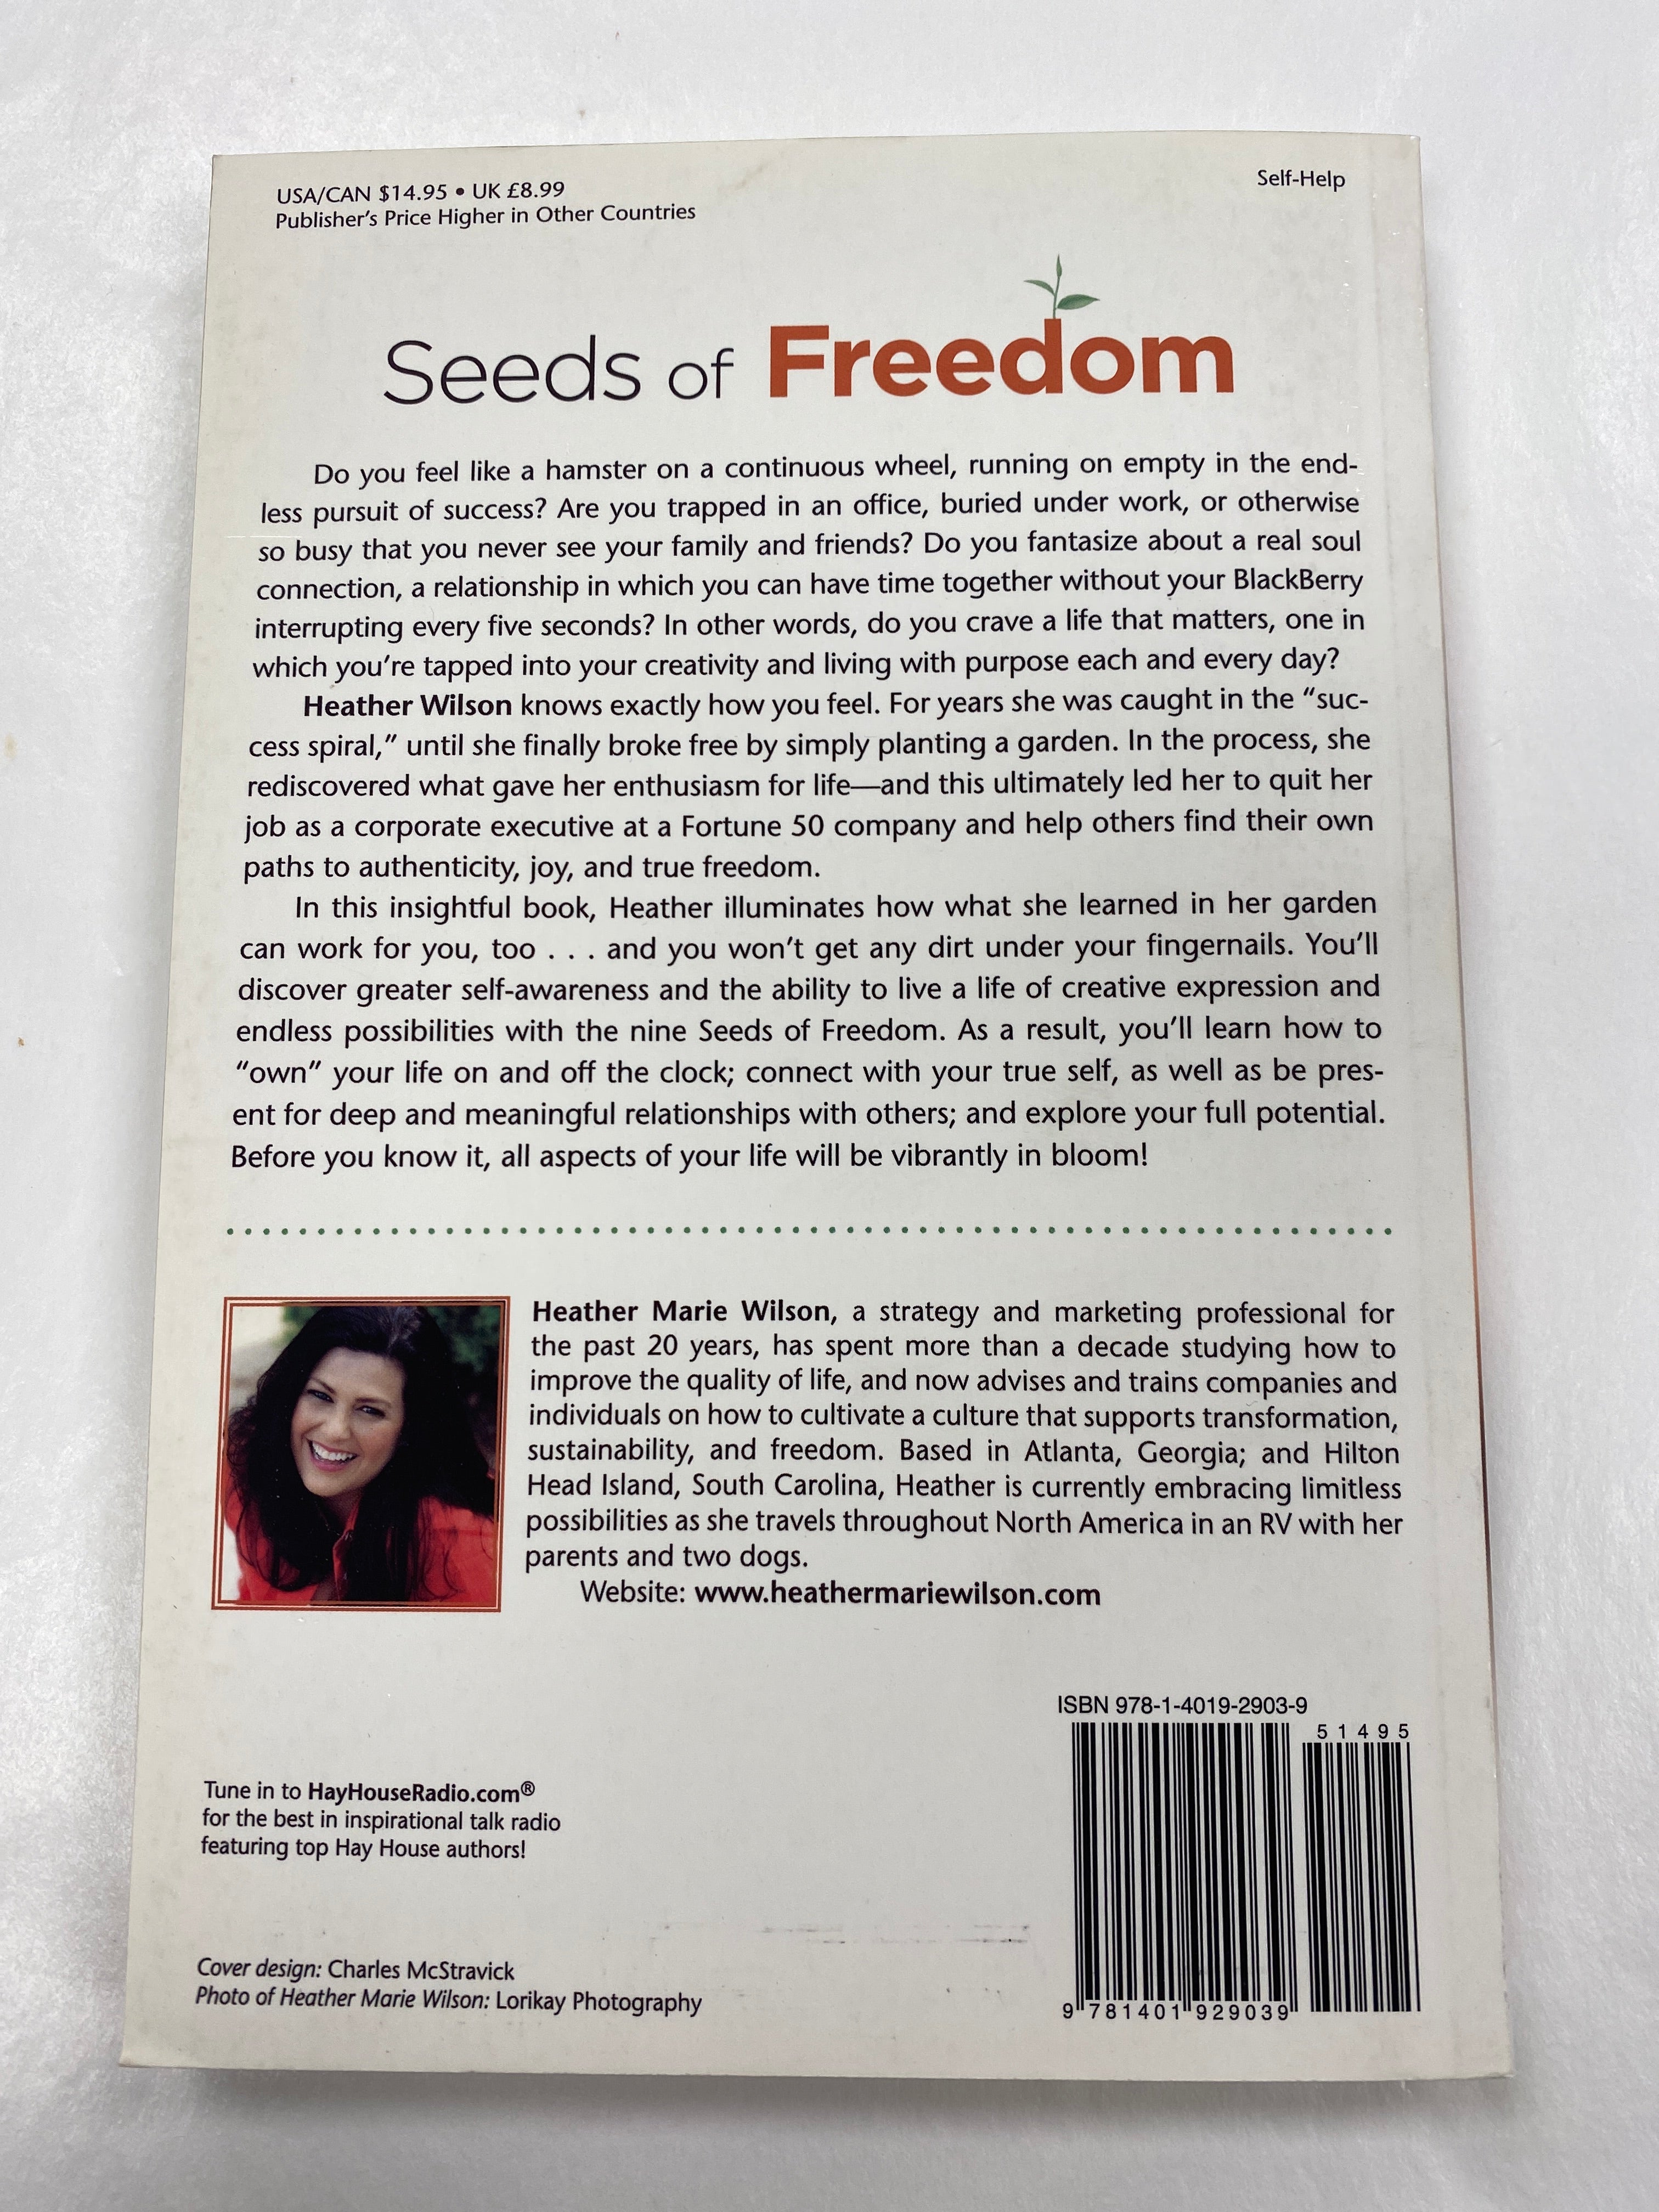 Seeds of Freedom